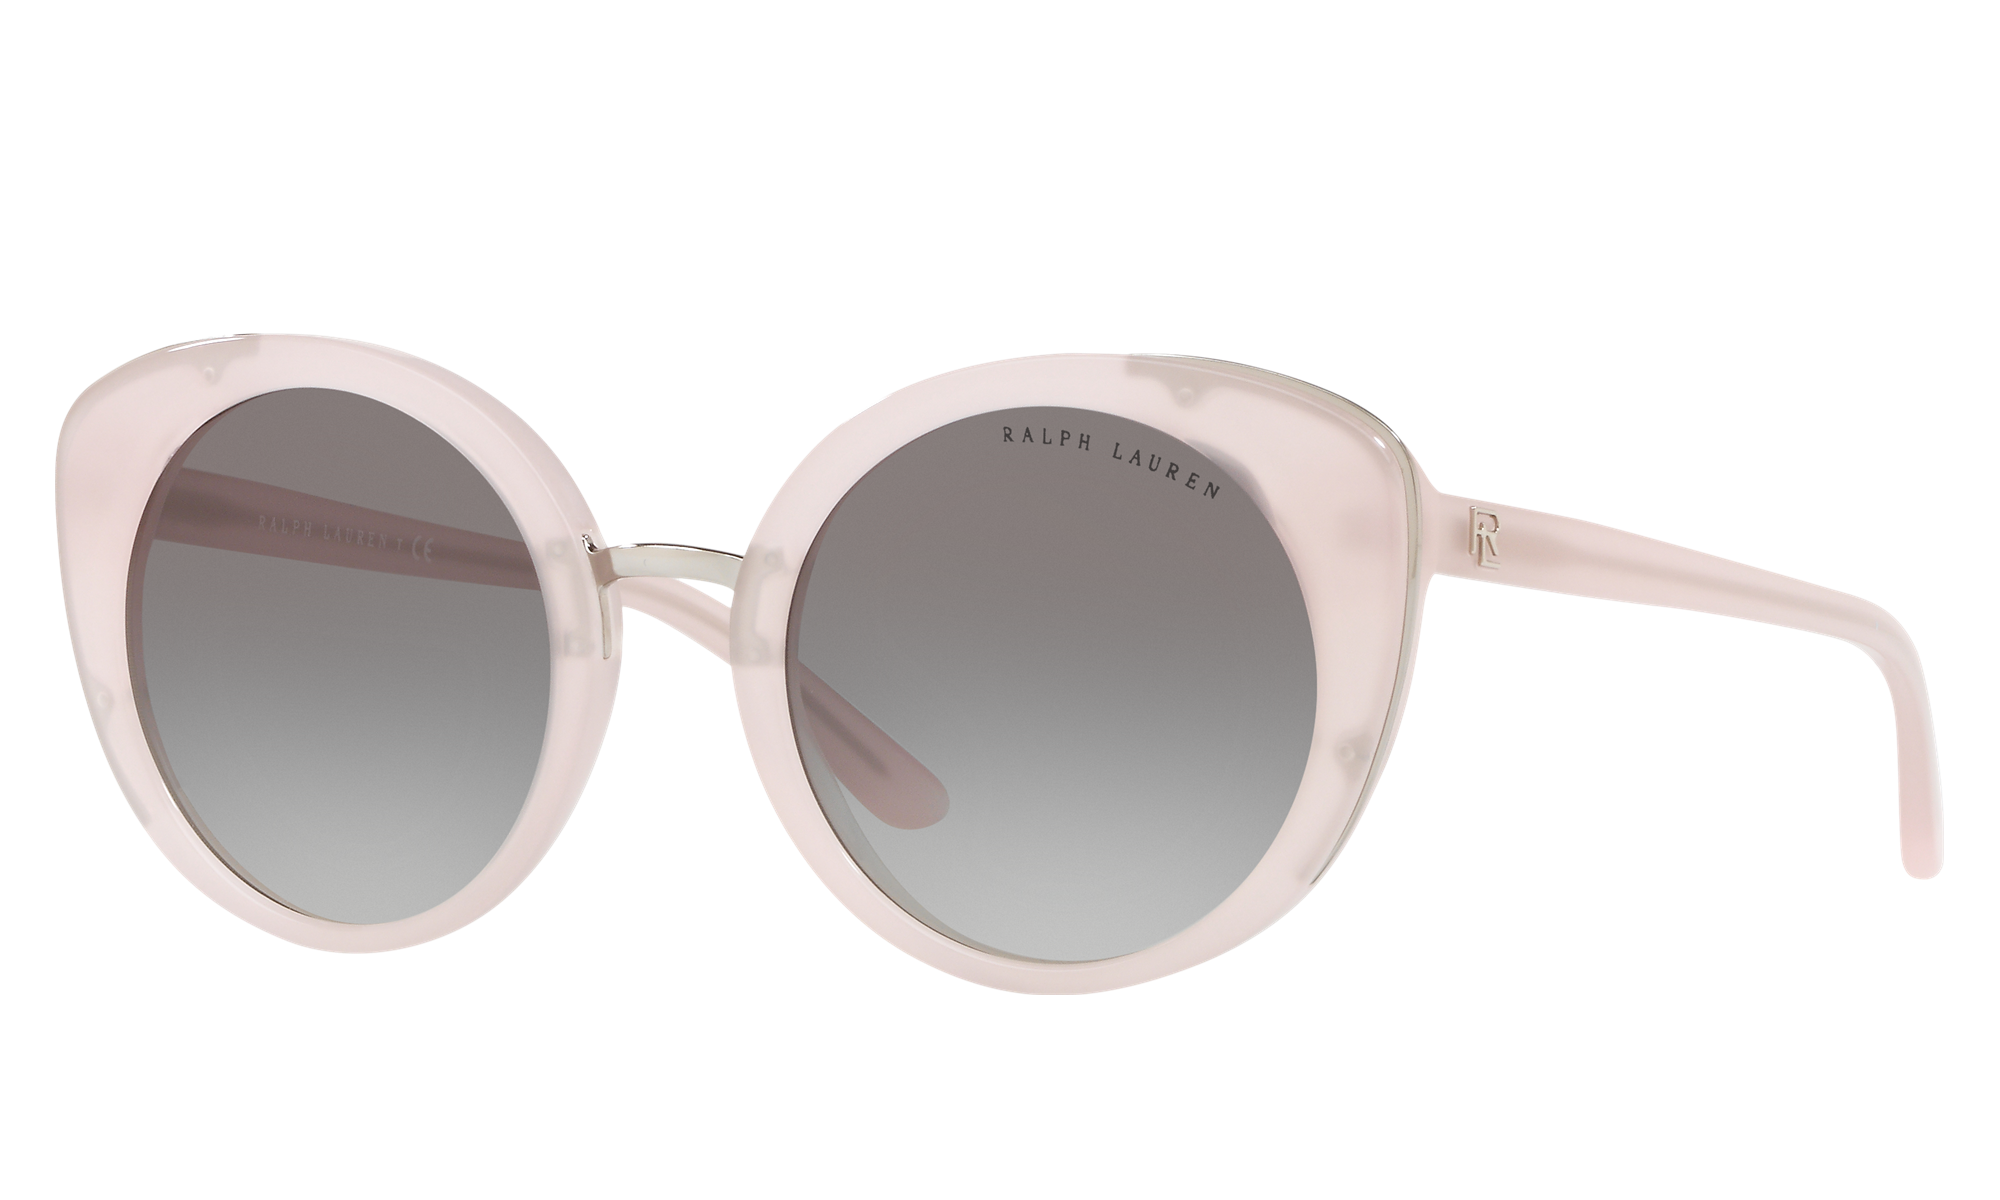 Ralph Lauren RL8165 Opal Pink Sunglasses | Glasses.com® | Free Shipping